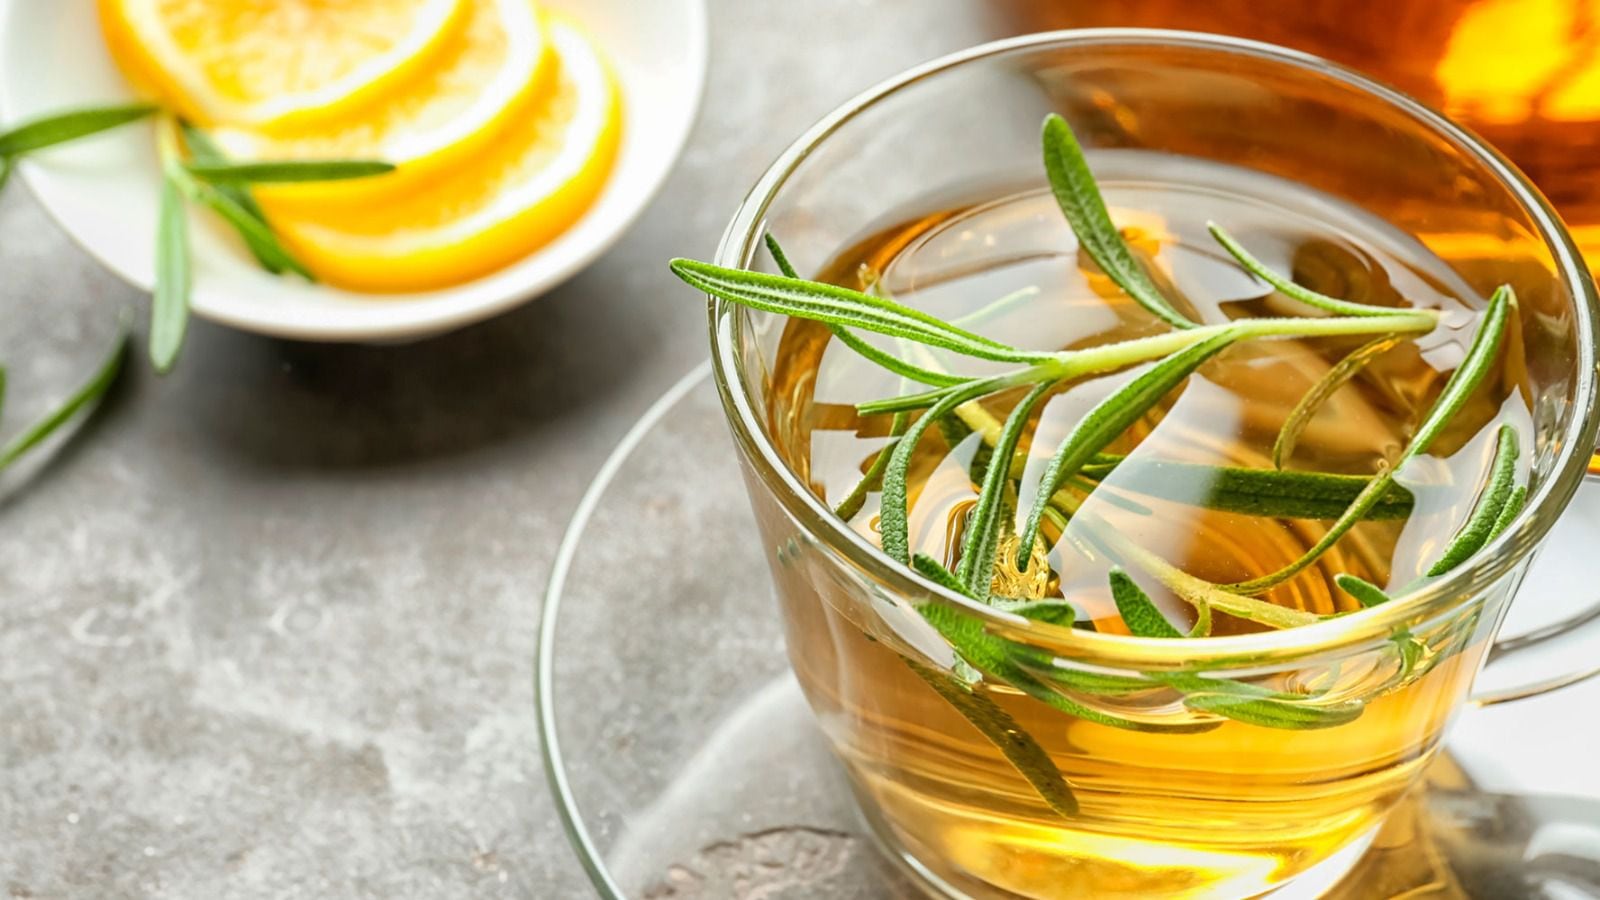 El té de romero es una bebida saludable. (Foto: Shutterstock)